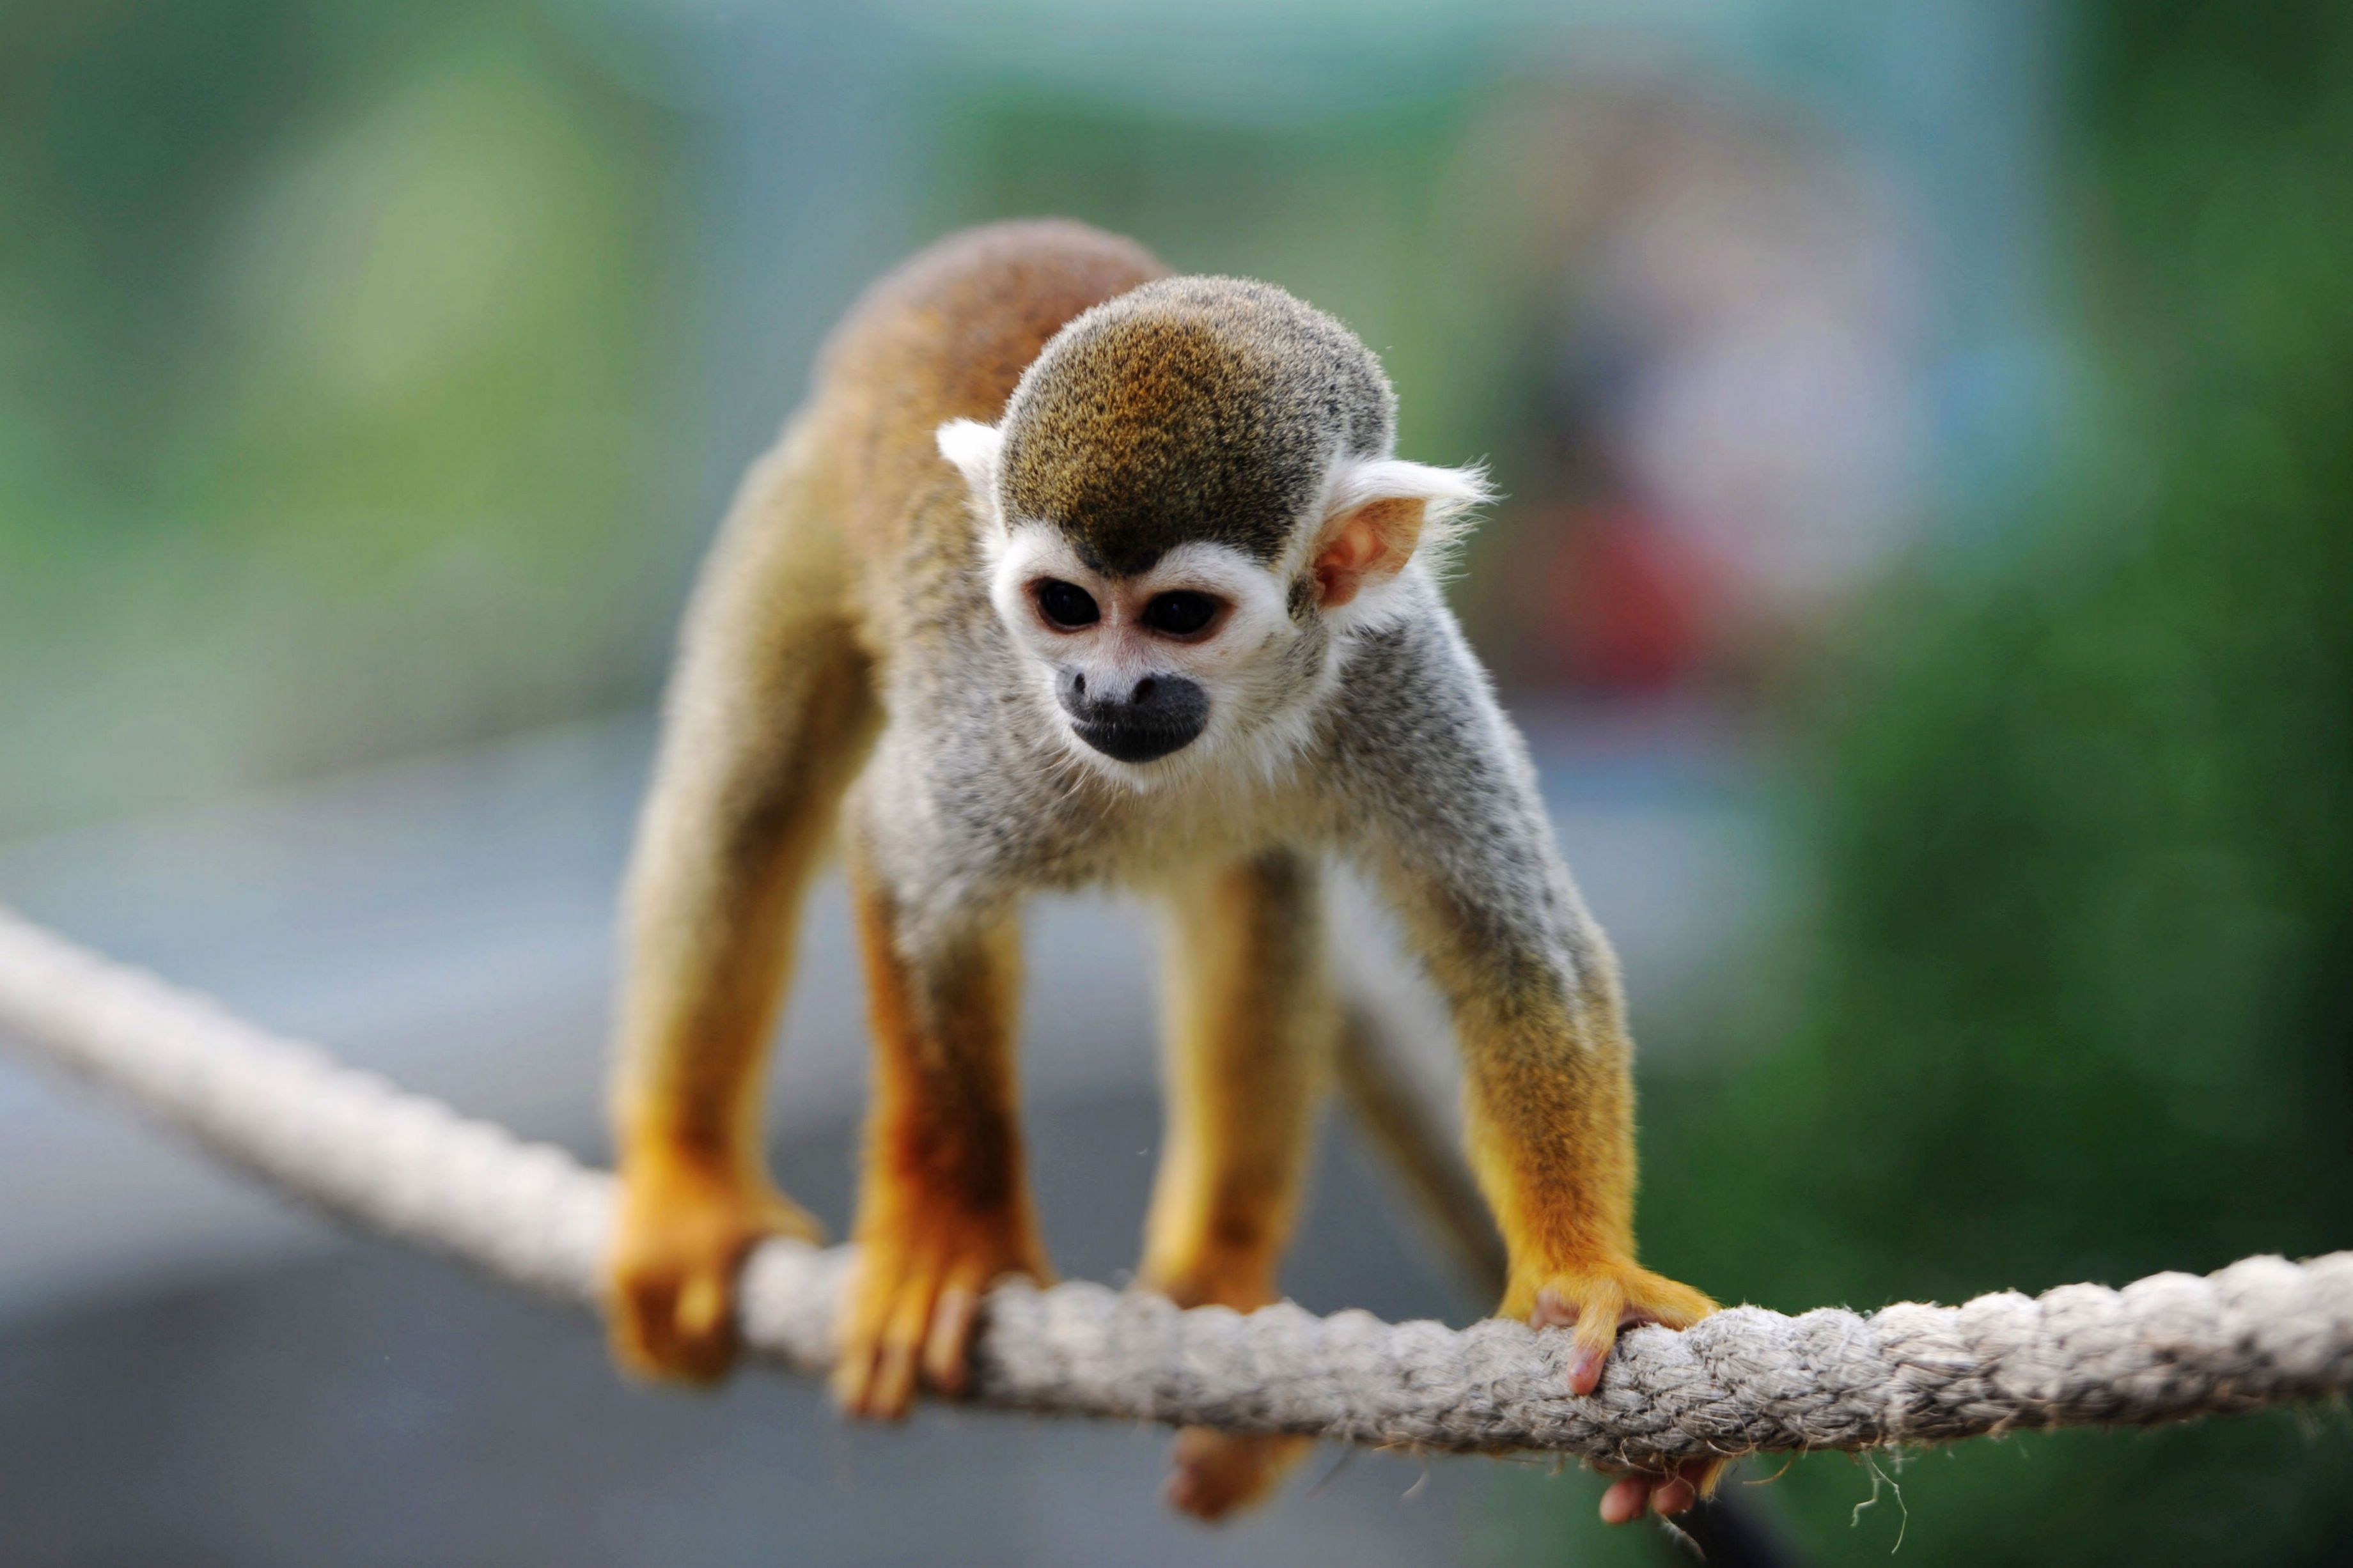 FDA reviewing animal studies in wake of monkey deaths | CNN